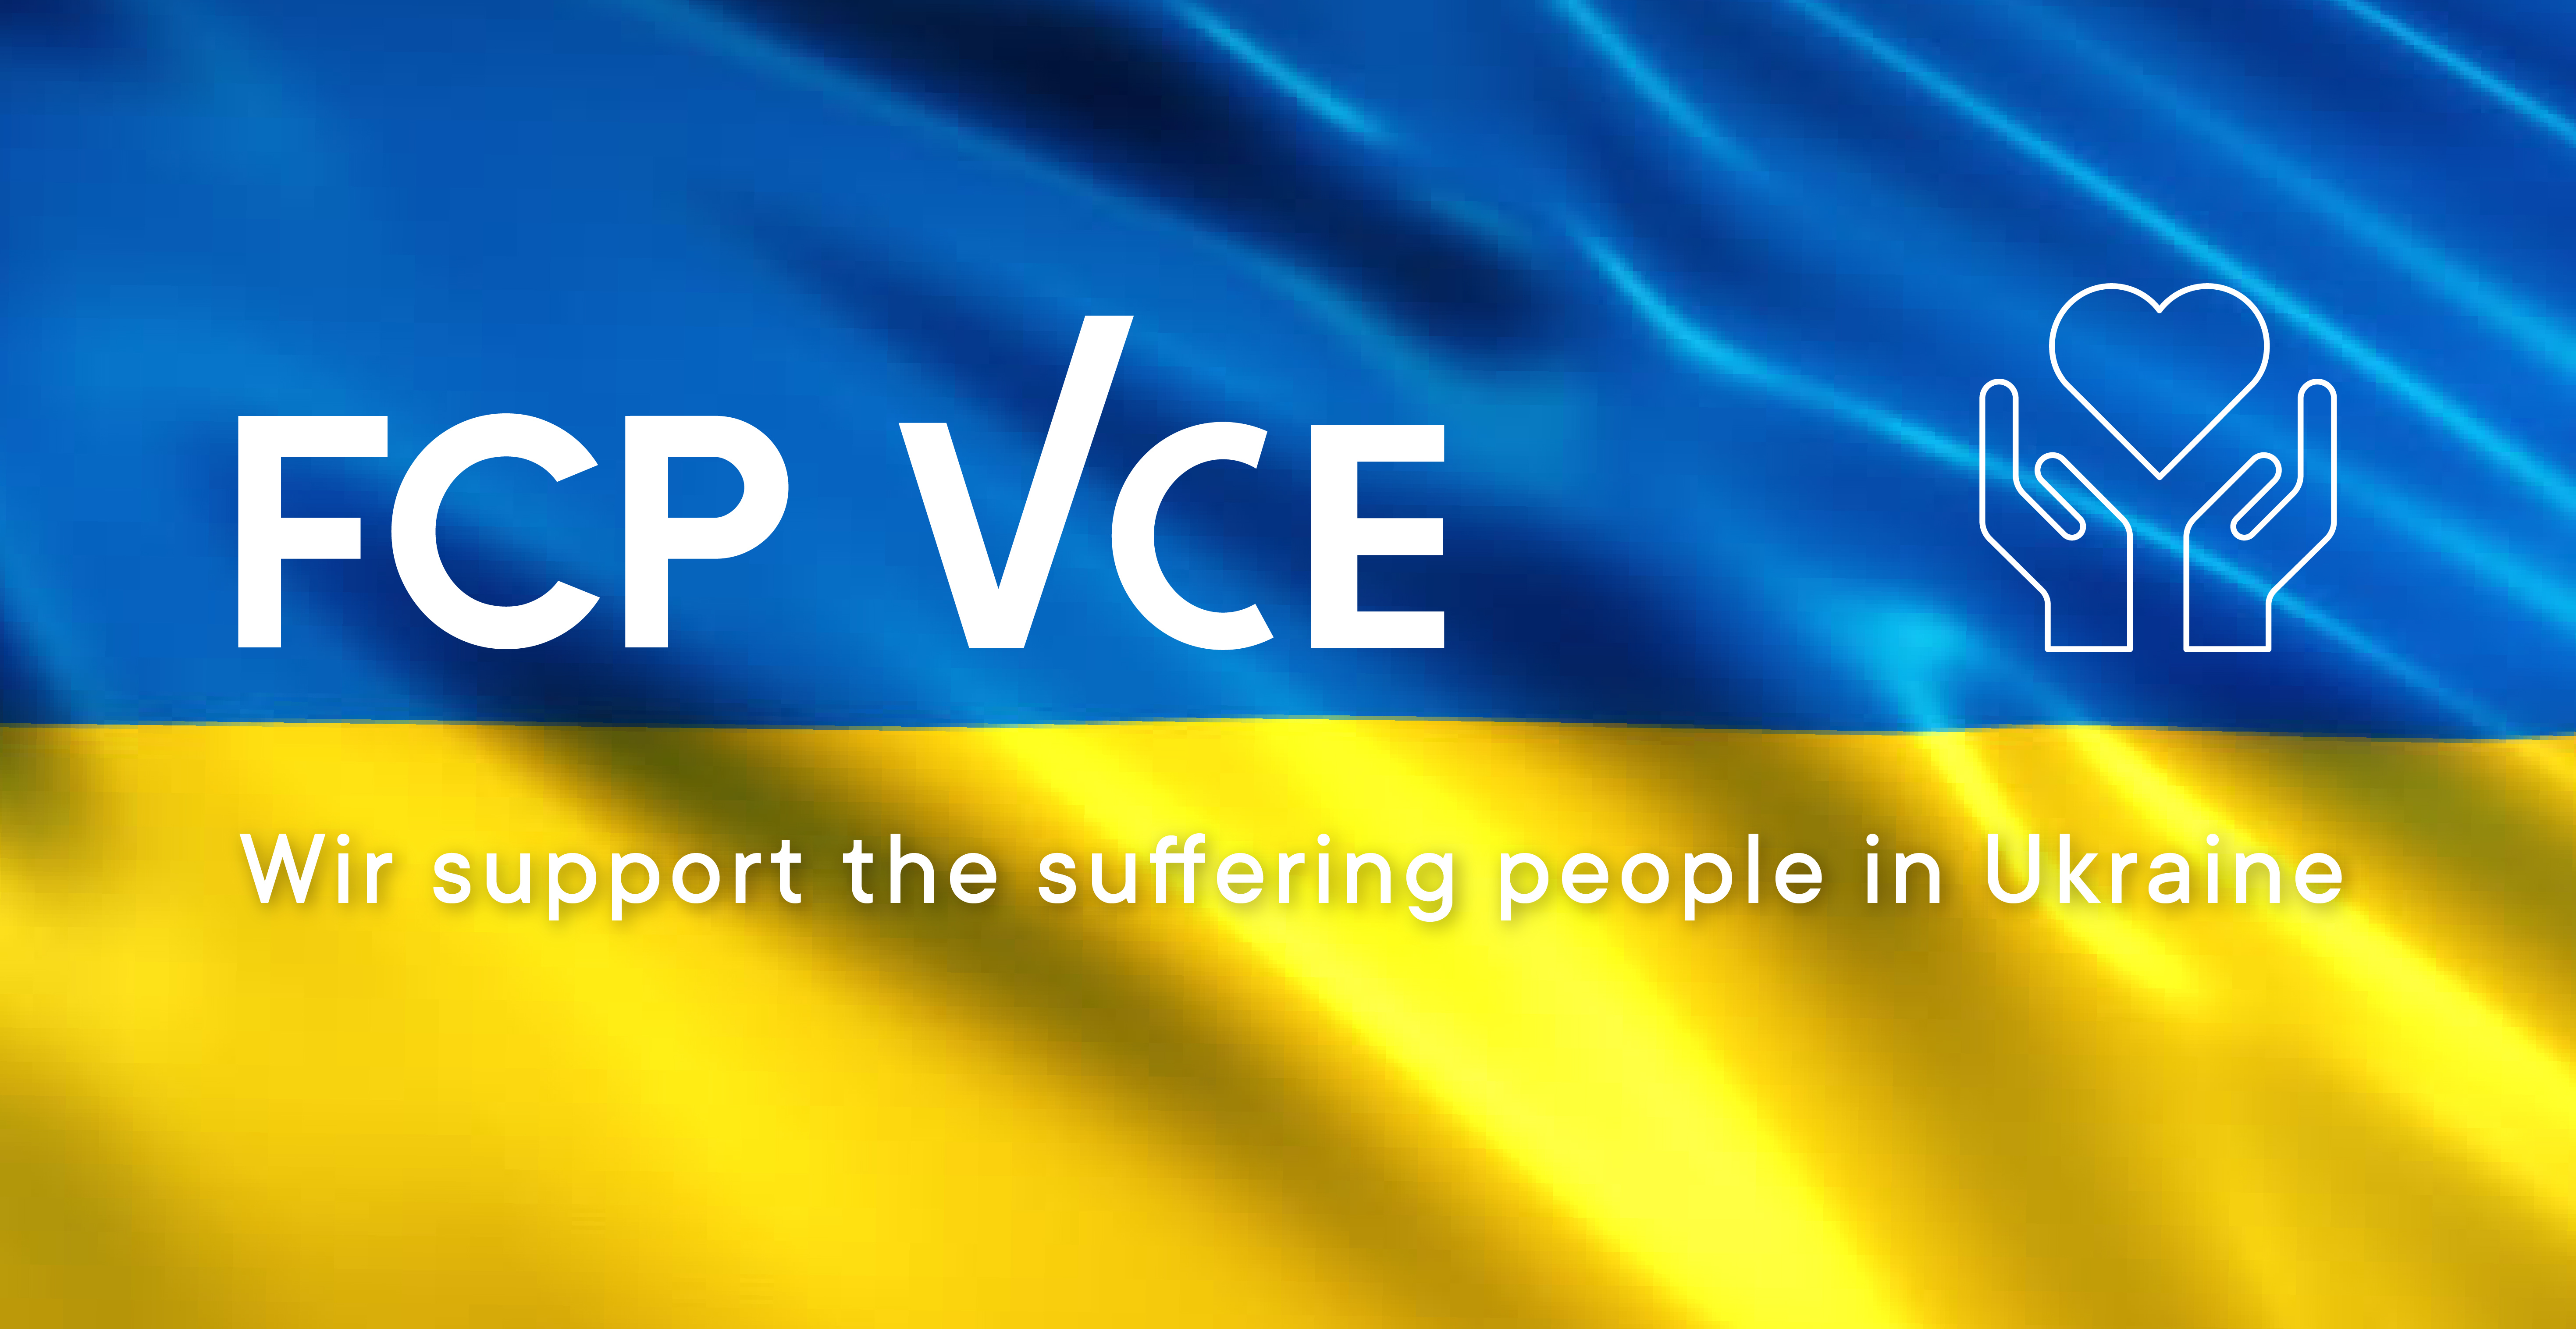 Wir support the suffering people in Ukraine